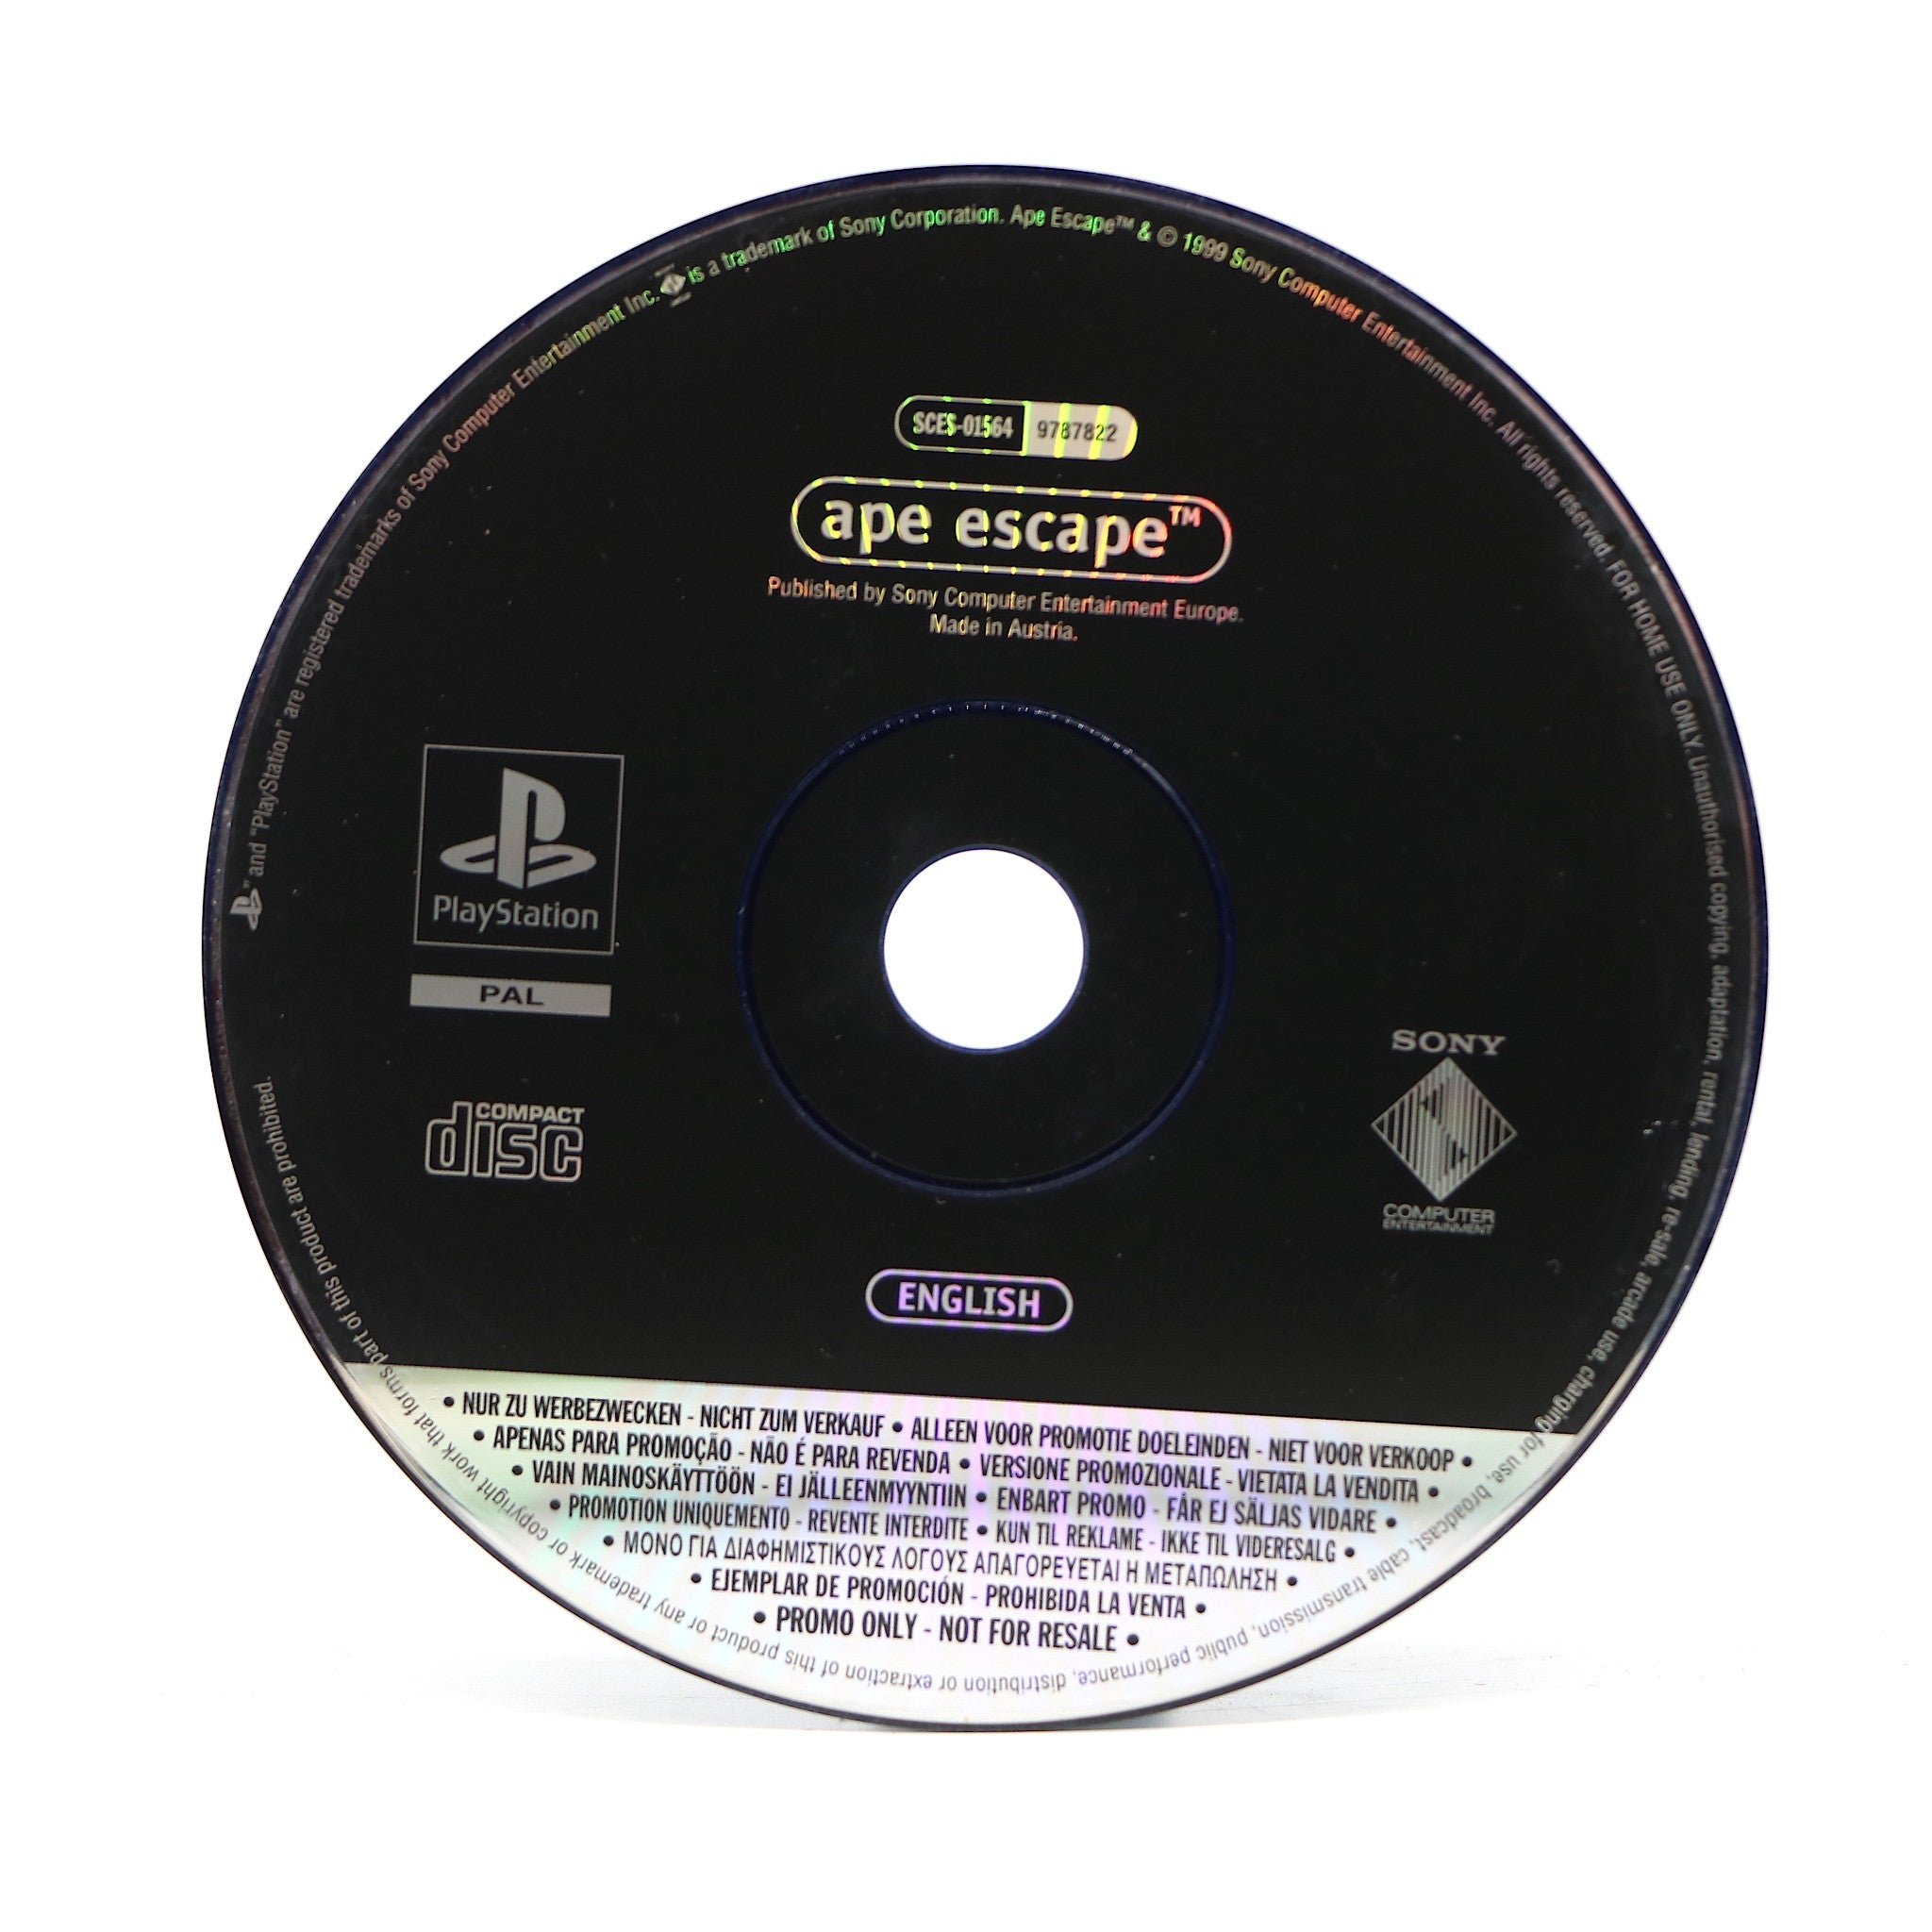 Ape Escape | Sony PS1 Game | Promo Version | Very Good Condition!